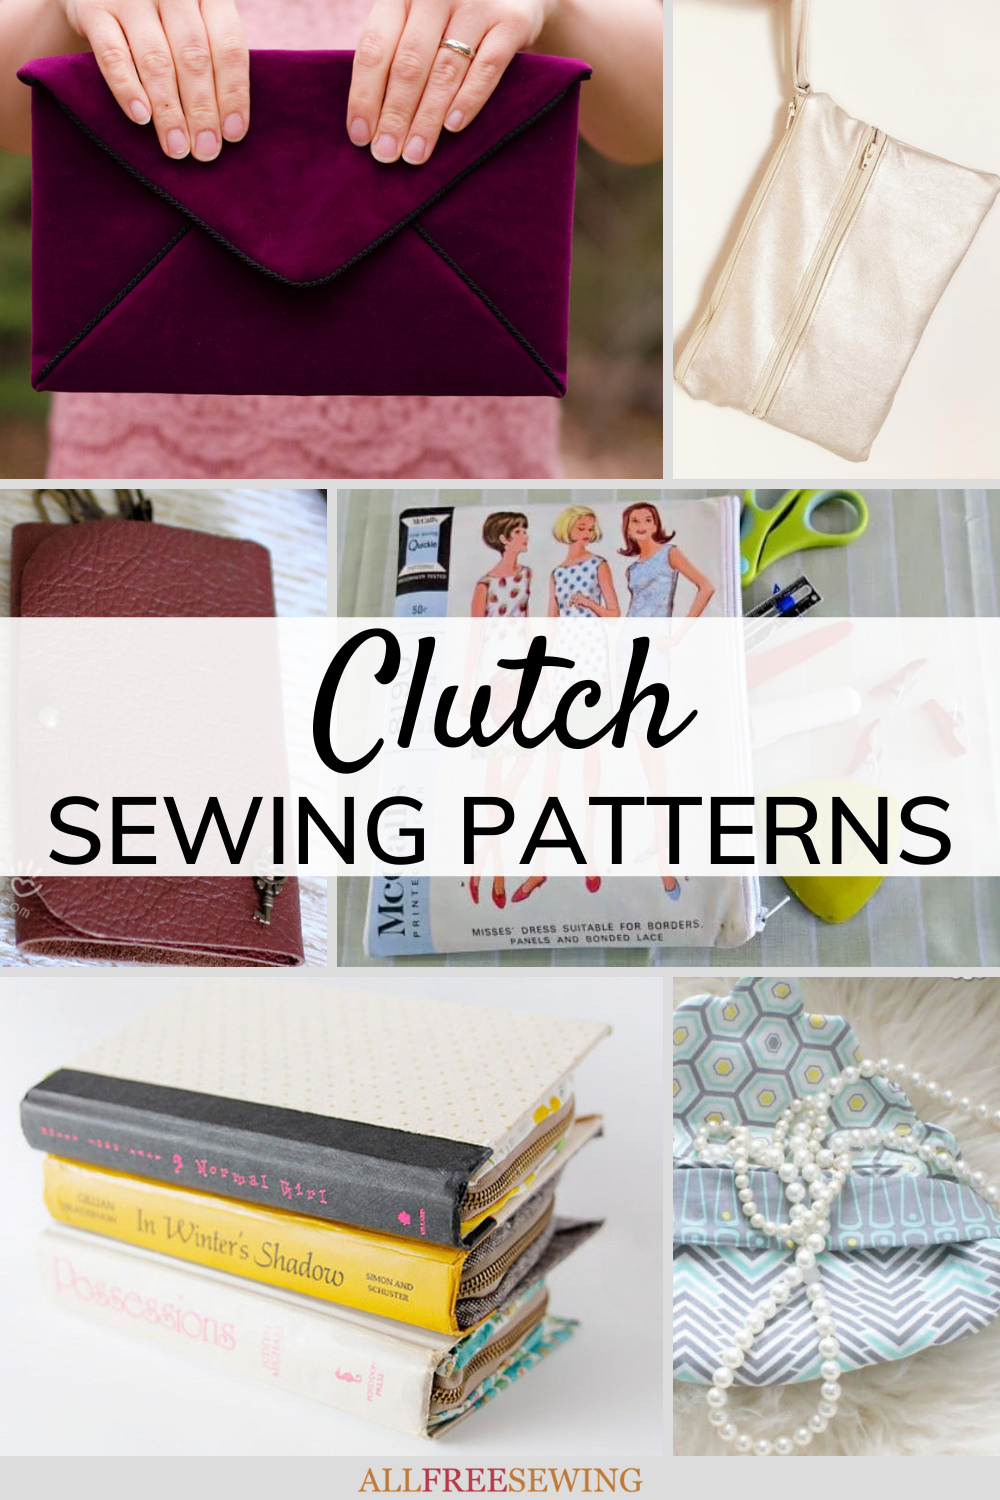 Clutch bag pattern - Gathered